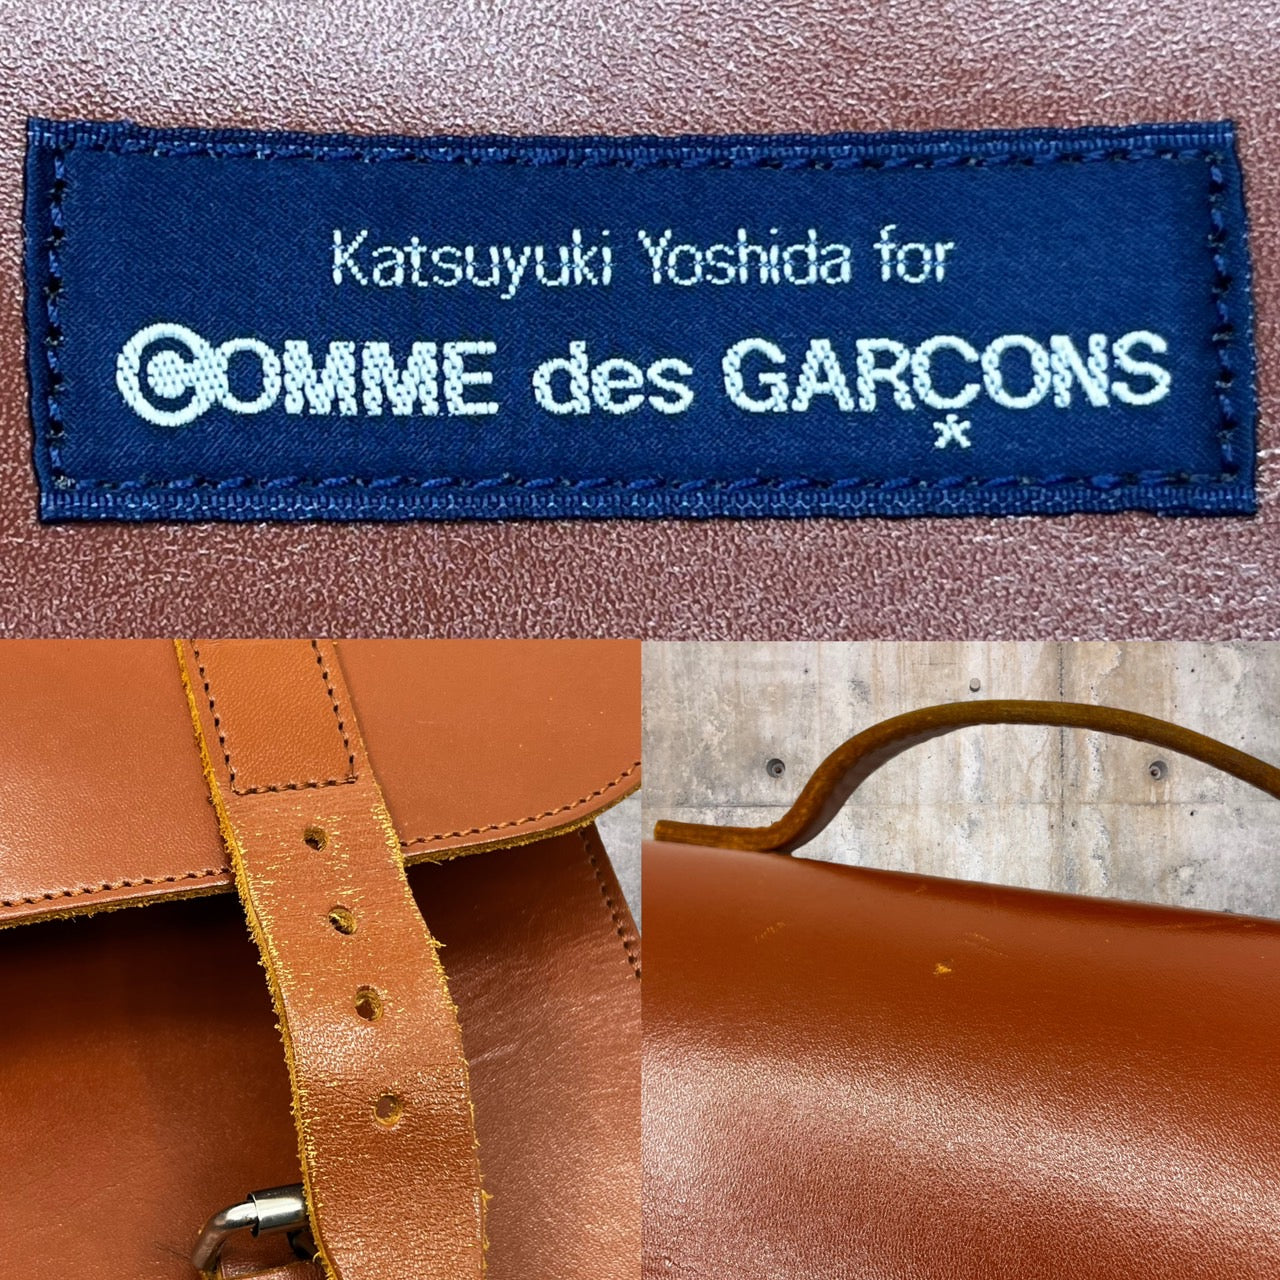 Katsuyuki Yoshida for COMME des GARCONS(カツユキヨシダフォーコムデギャルソン) aoyama limited 2WAY leather shoulder bag/青山限定2WAYレザーショルダーバッグ/吉田克幸 ブラウン